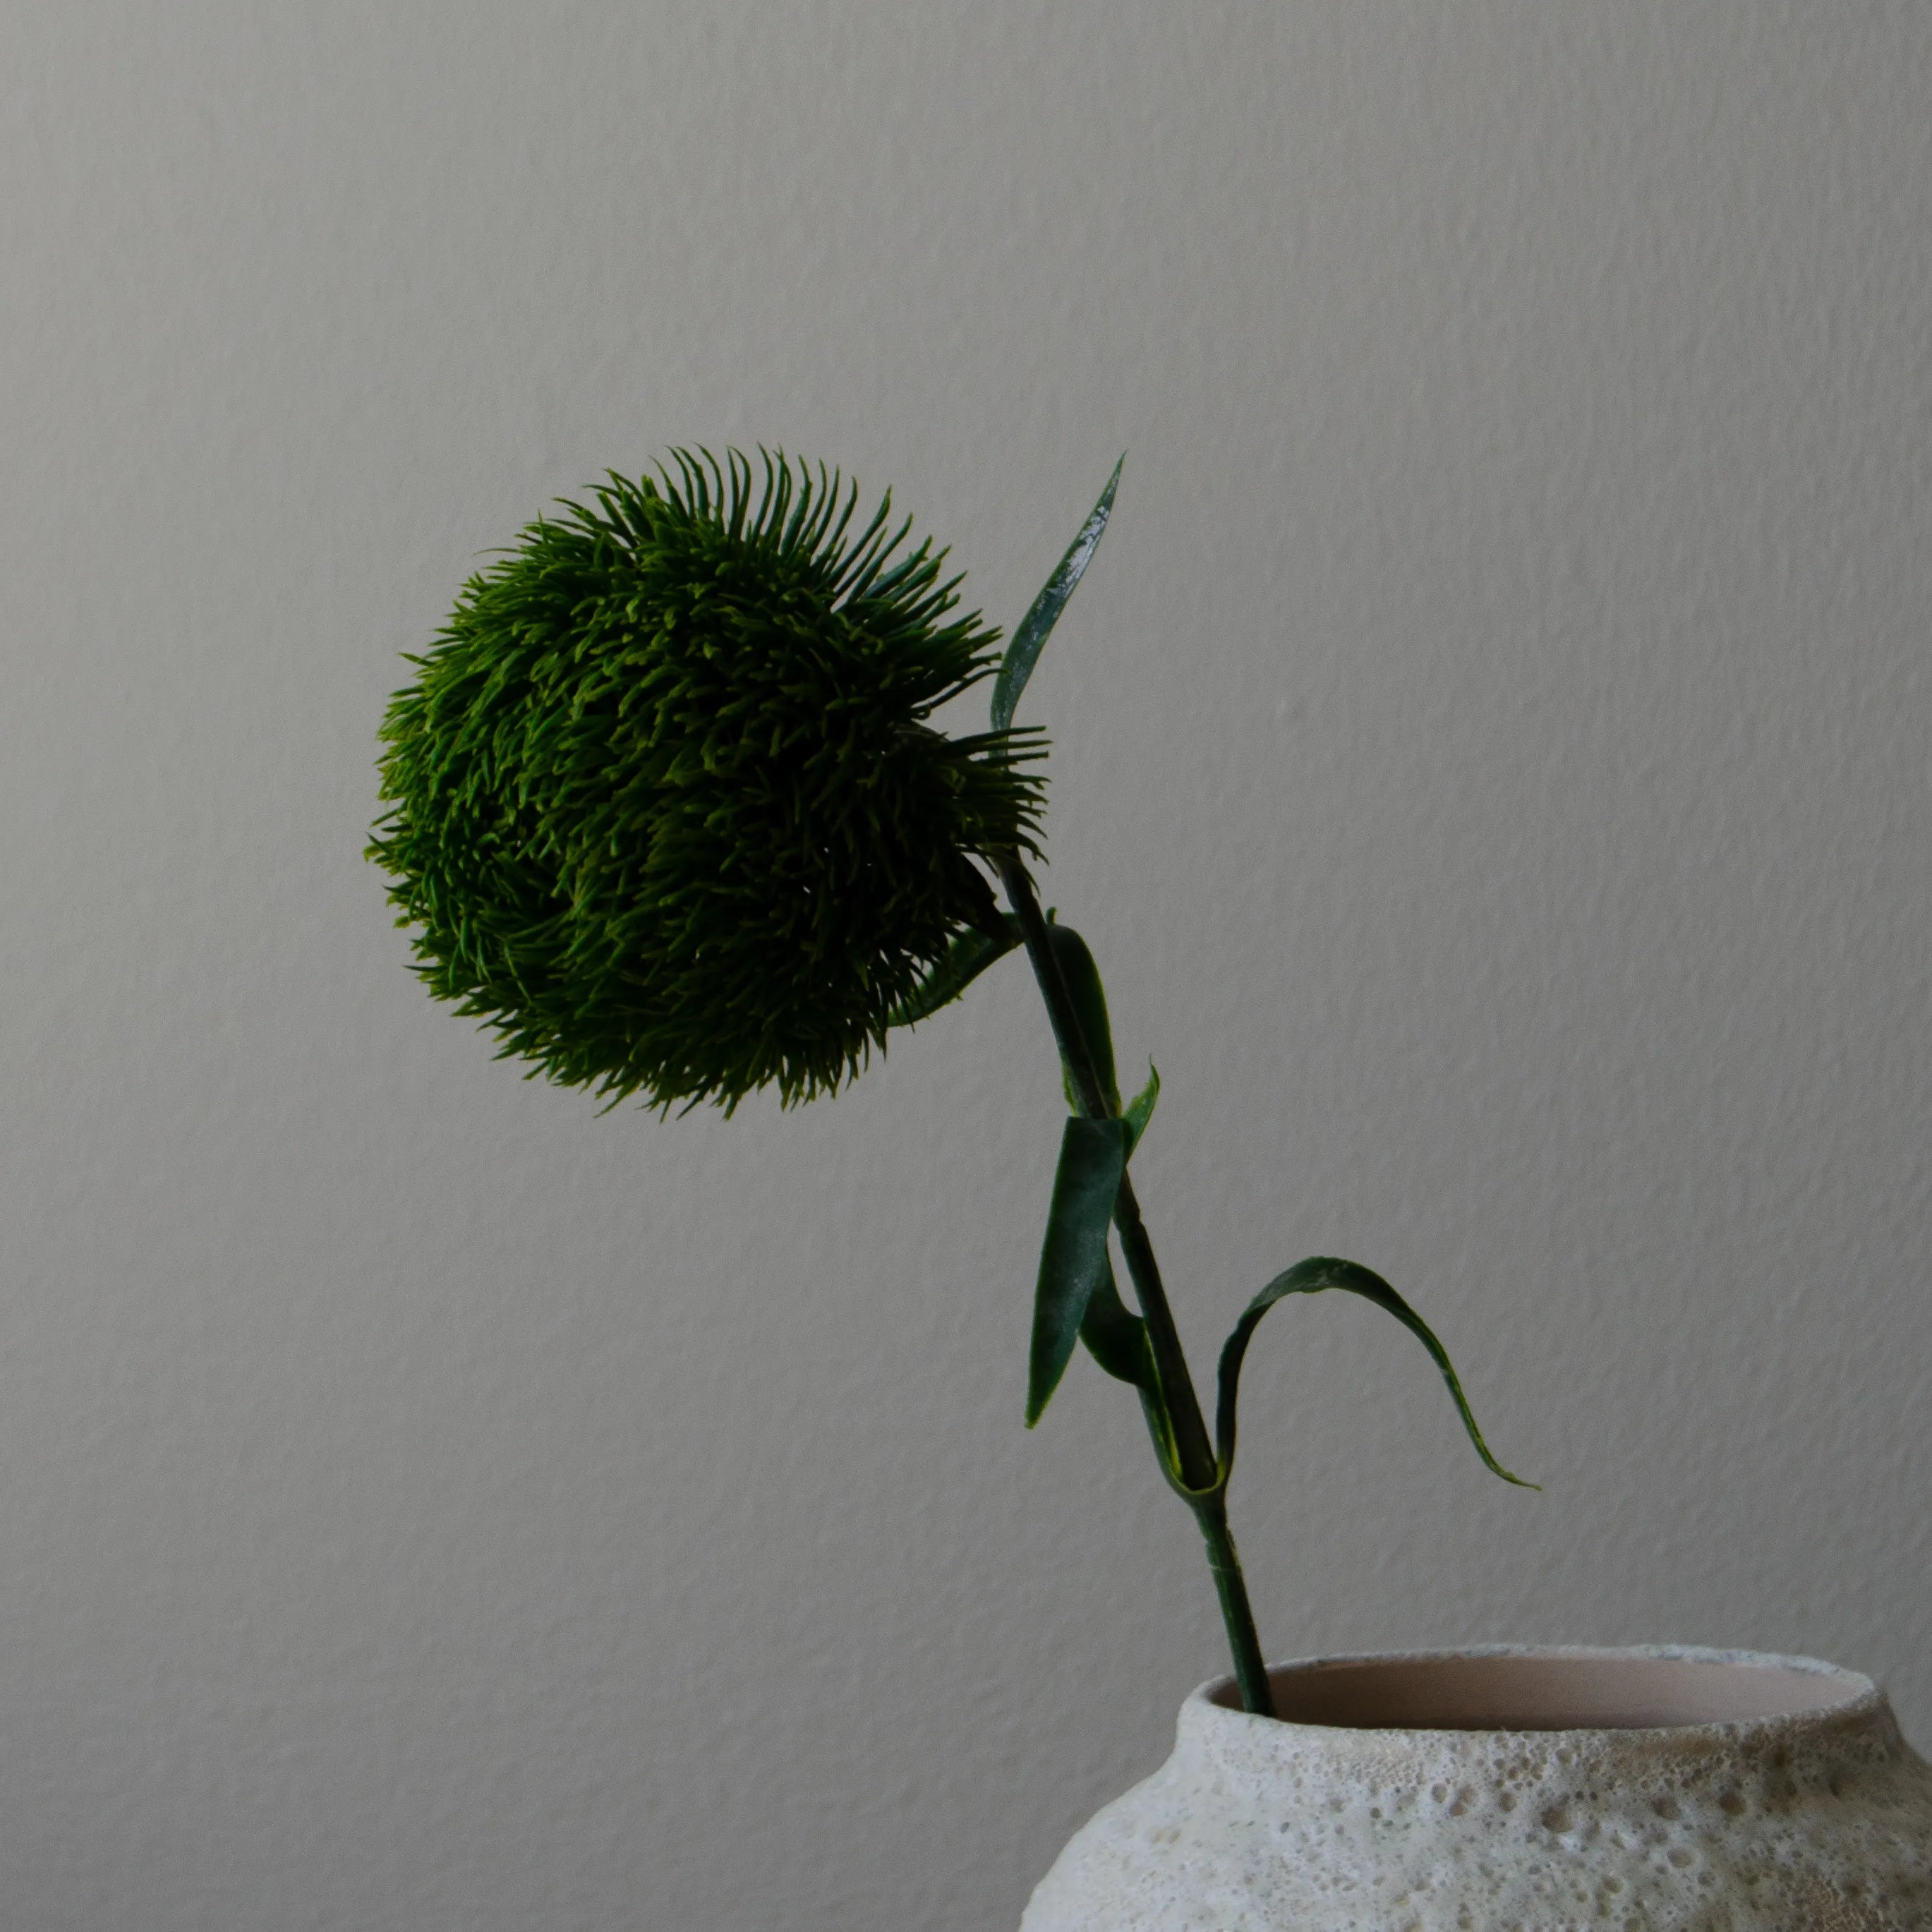 Artificial Dianthus Barbatus "Green Ball" from Botané